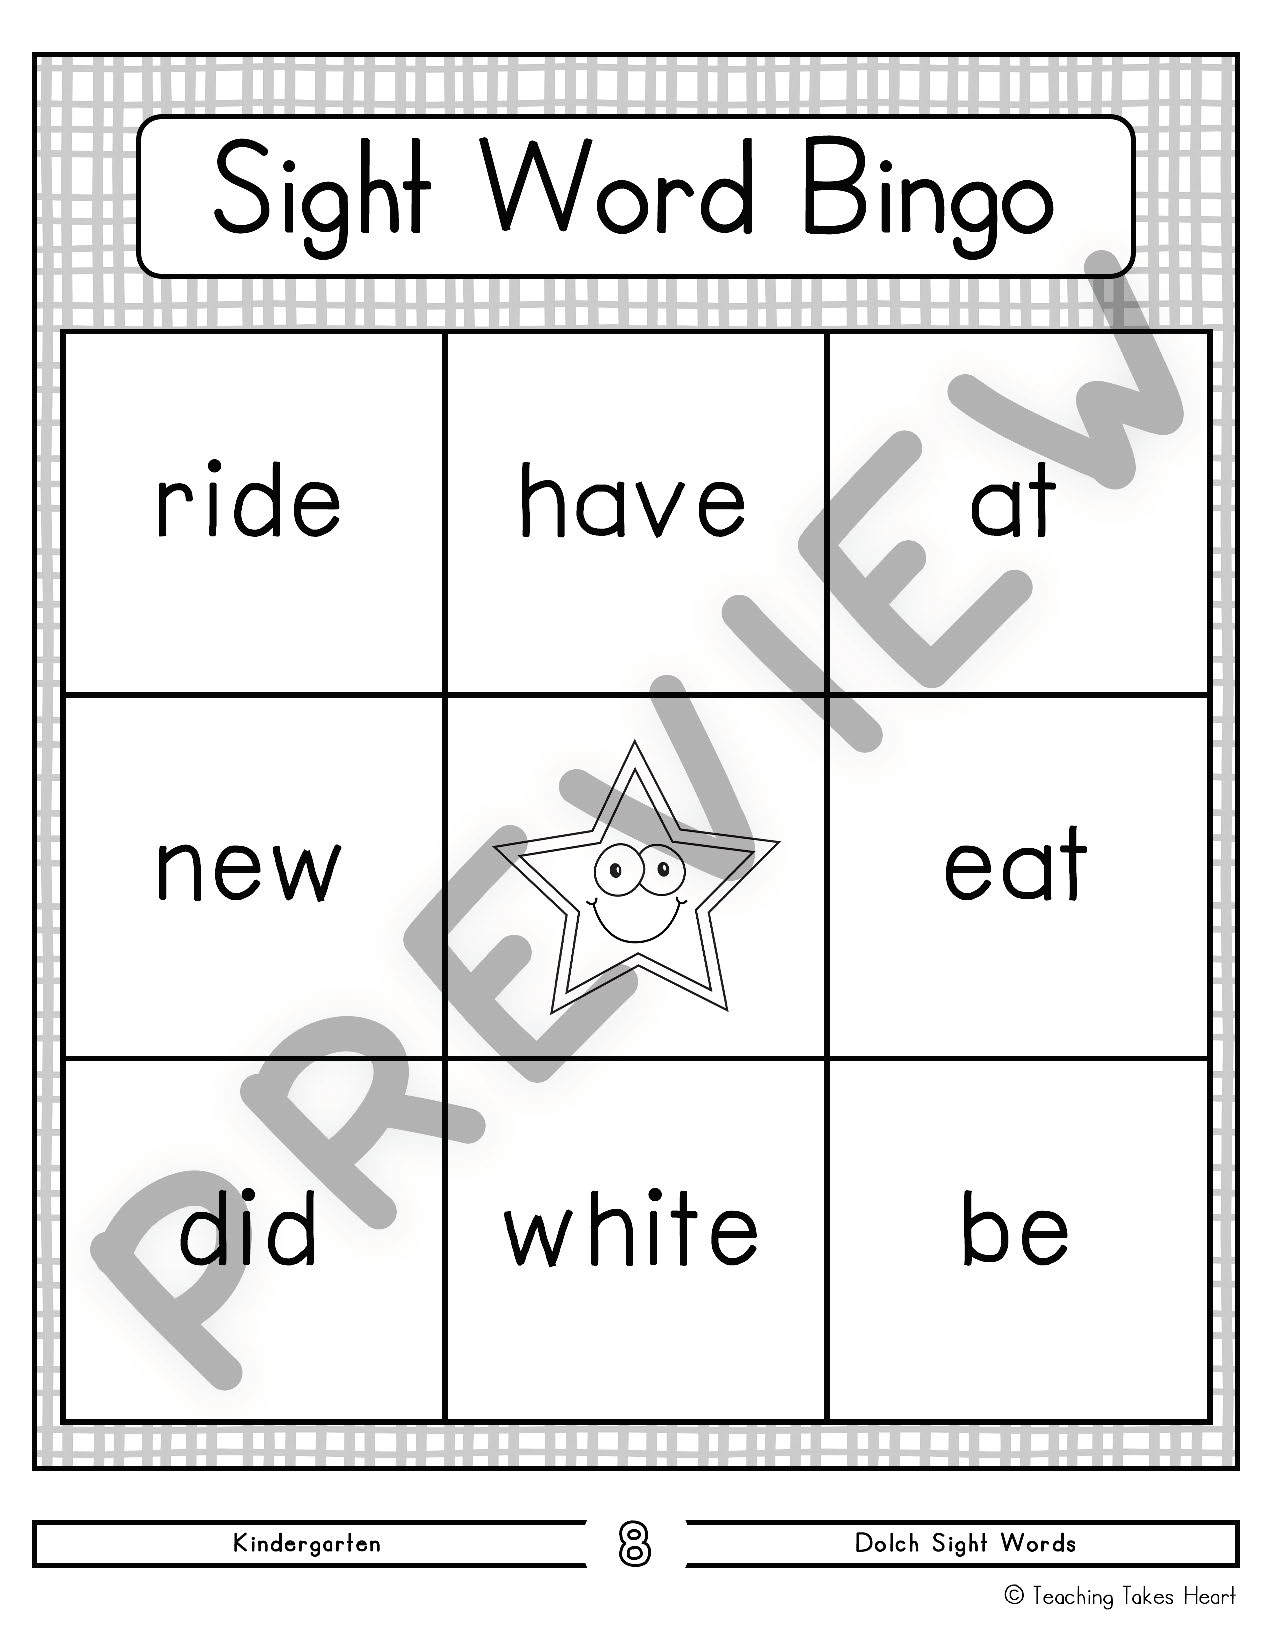 free sight word bingo printables for kindergarten